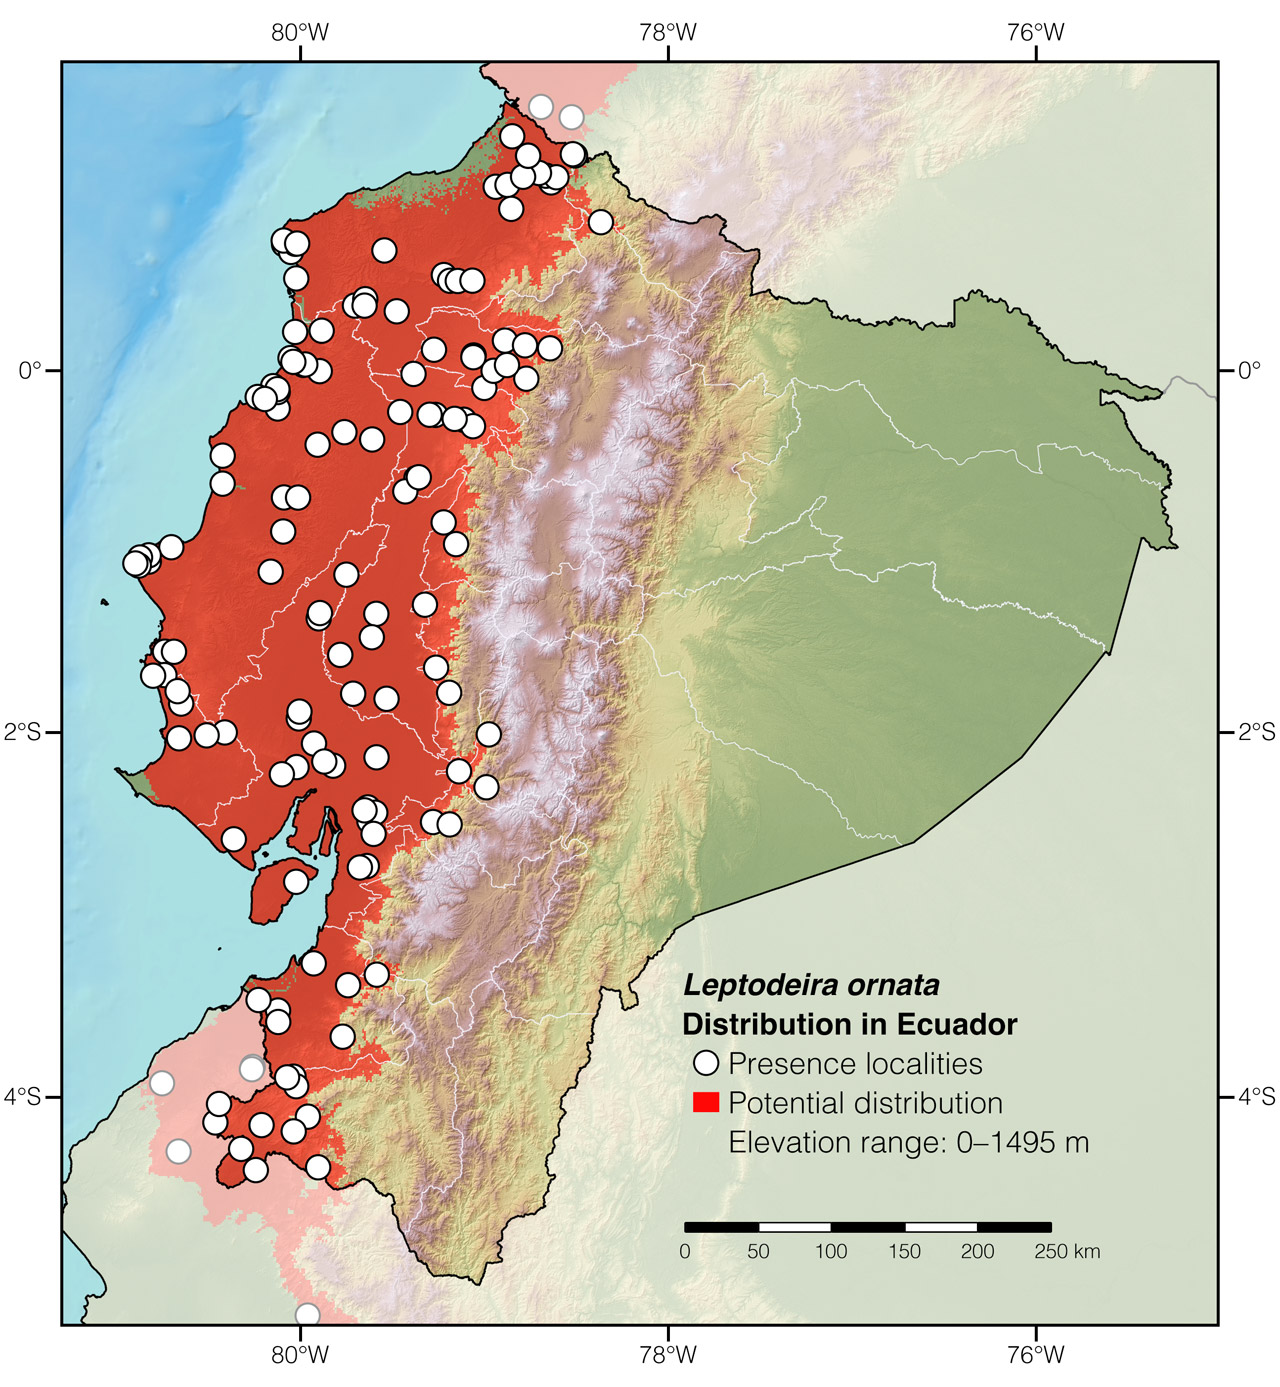 Distribution of Leptodeira ornata in Ecuador